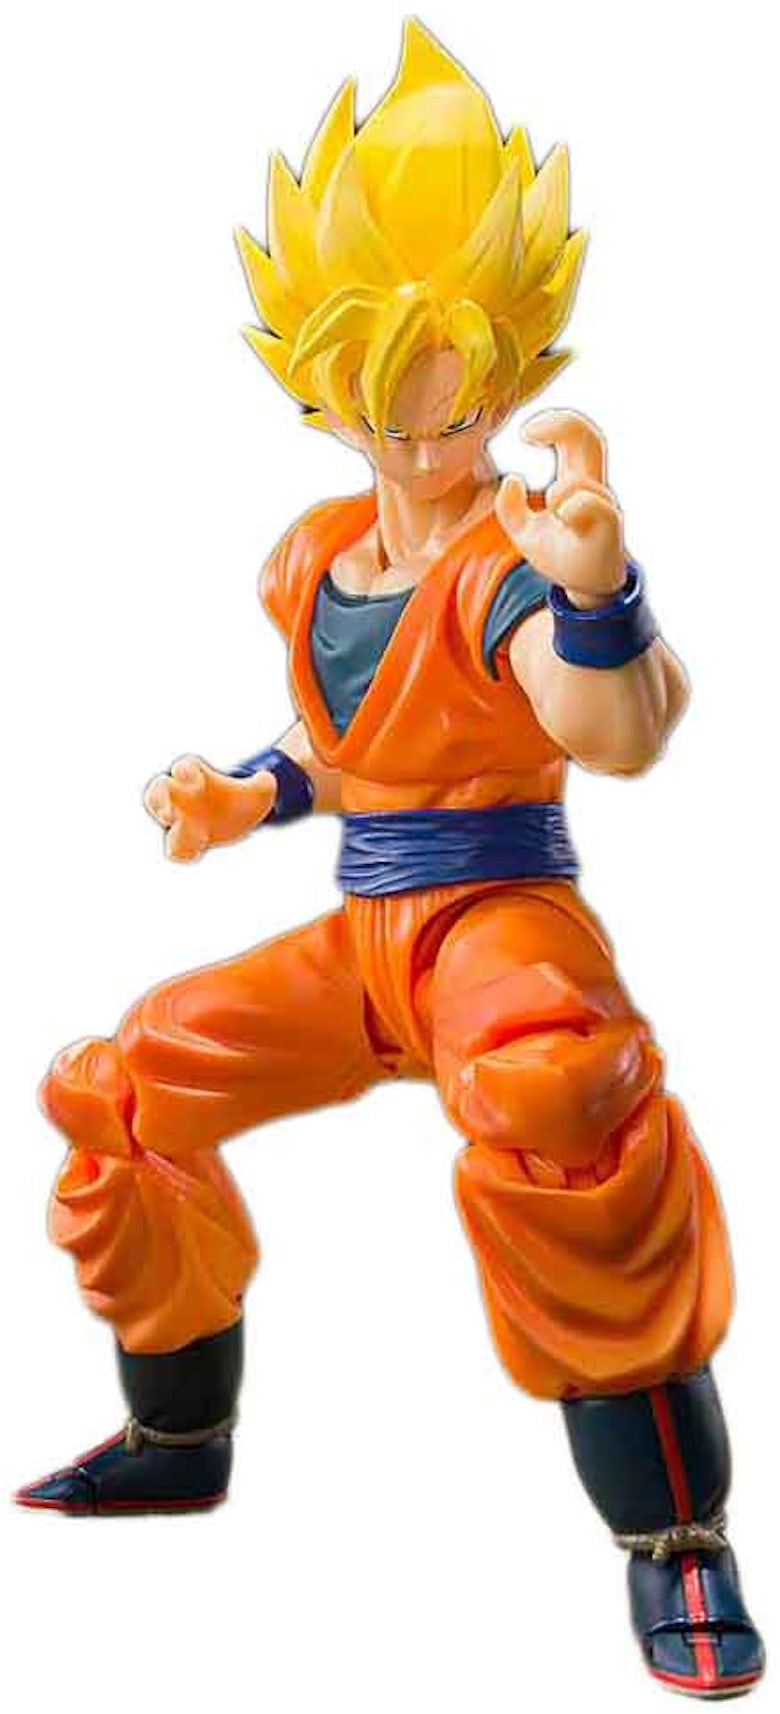 Dragonball - Bandai S.H.Figuarts - Son Goku Super Saiyan Full Power